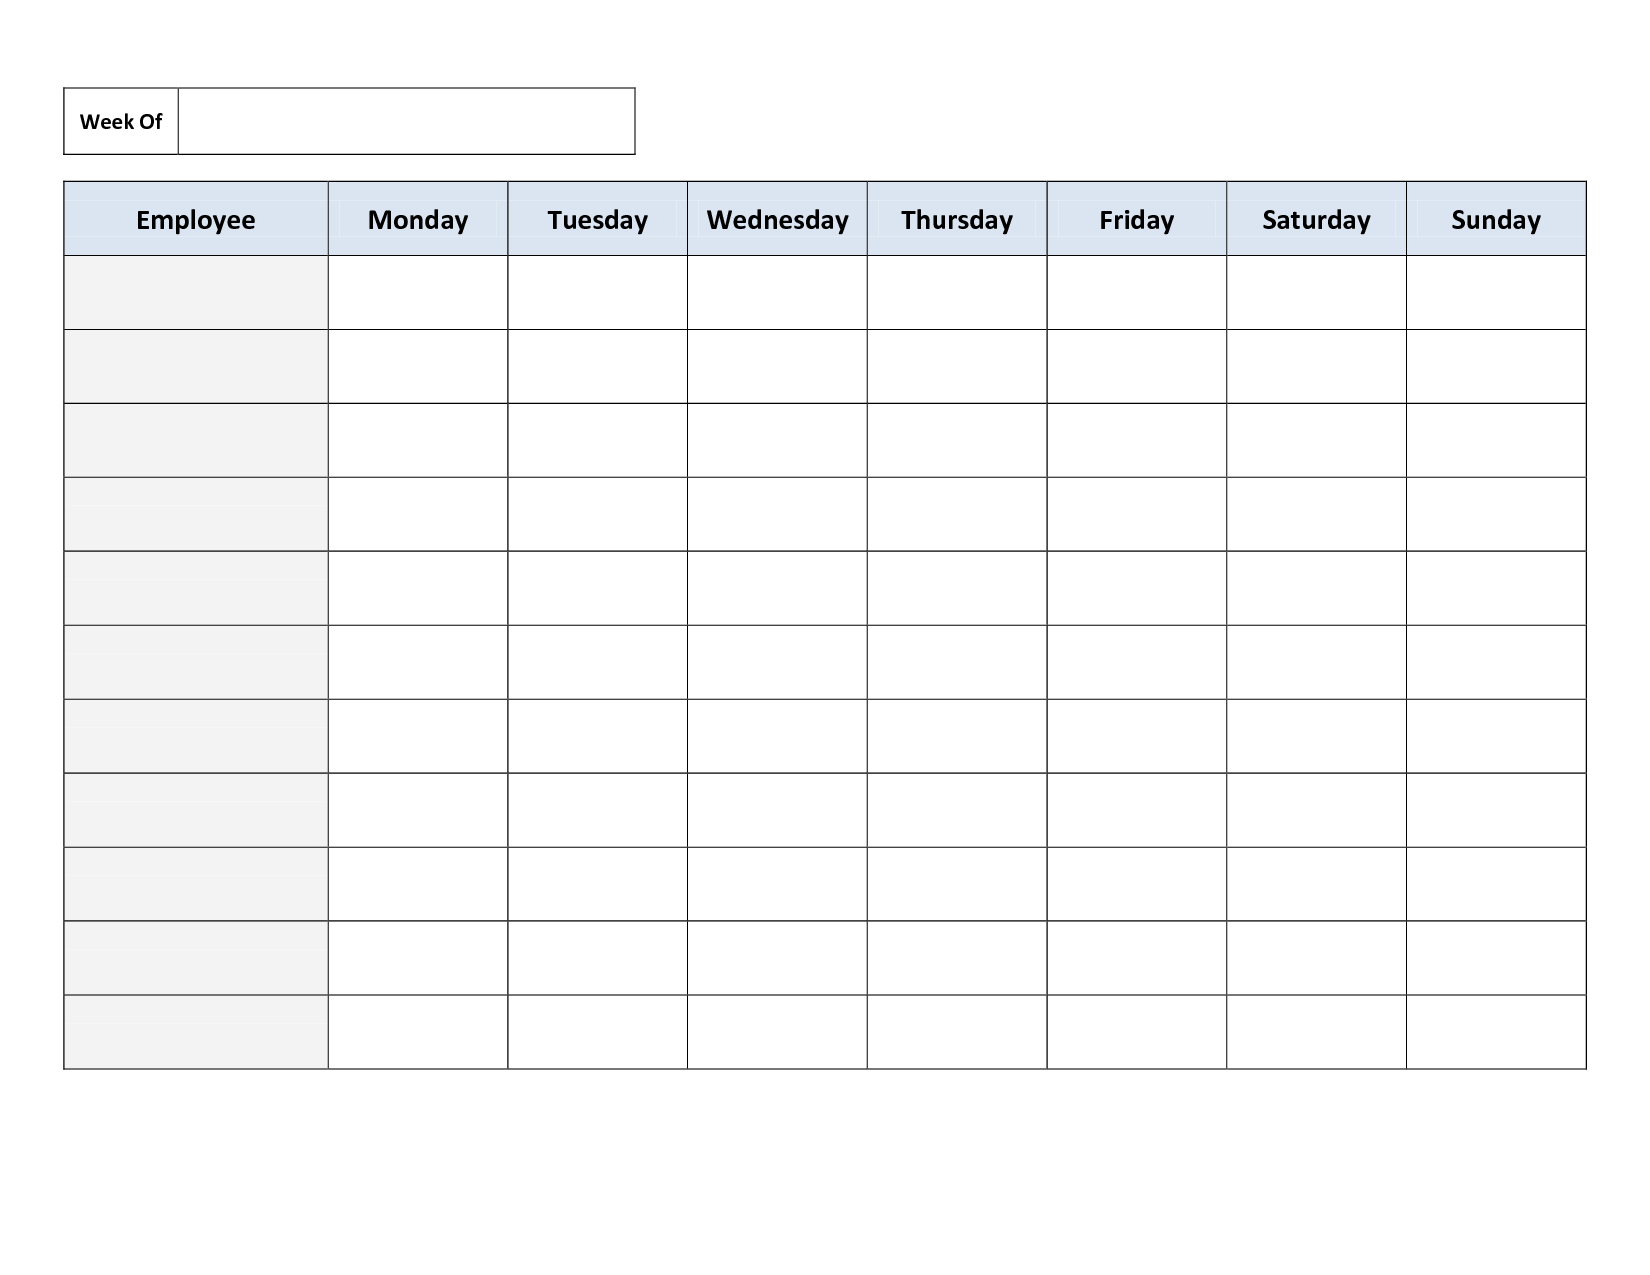 Weekly Employee Work Schedule Template. Free Blank Schedule.pdf - Free Printable Weekly Work Schedule